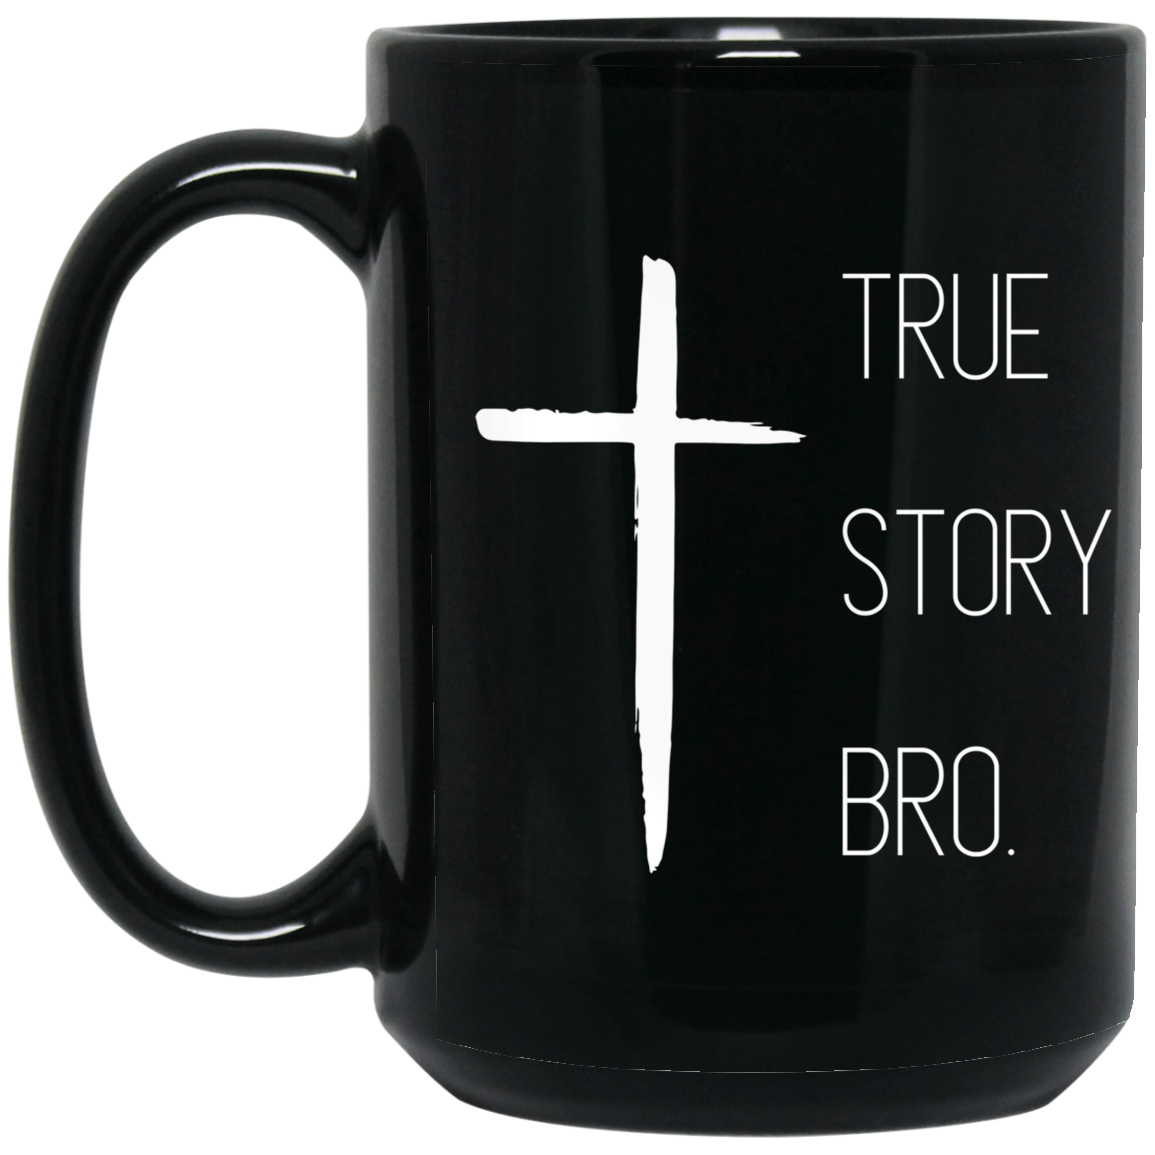 True Story Bro. | Black Mug